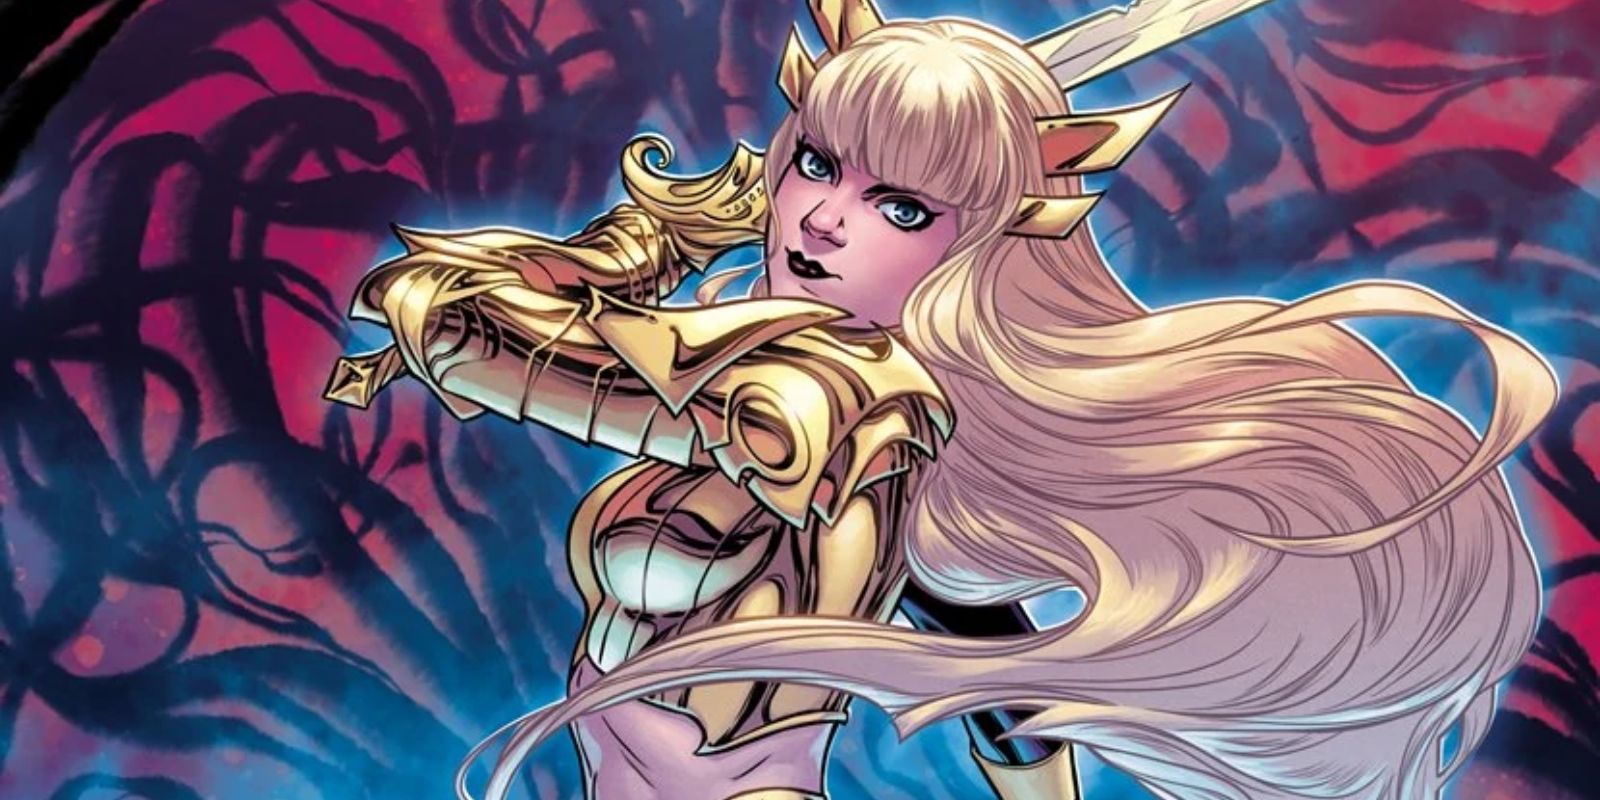 Magik smiles while pulling back her golden SoulsSword to strike in Marvel Comics